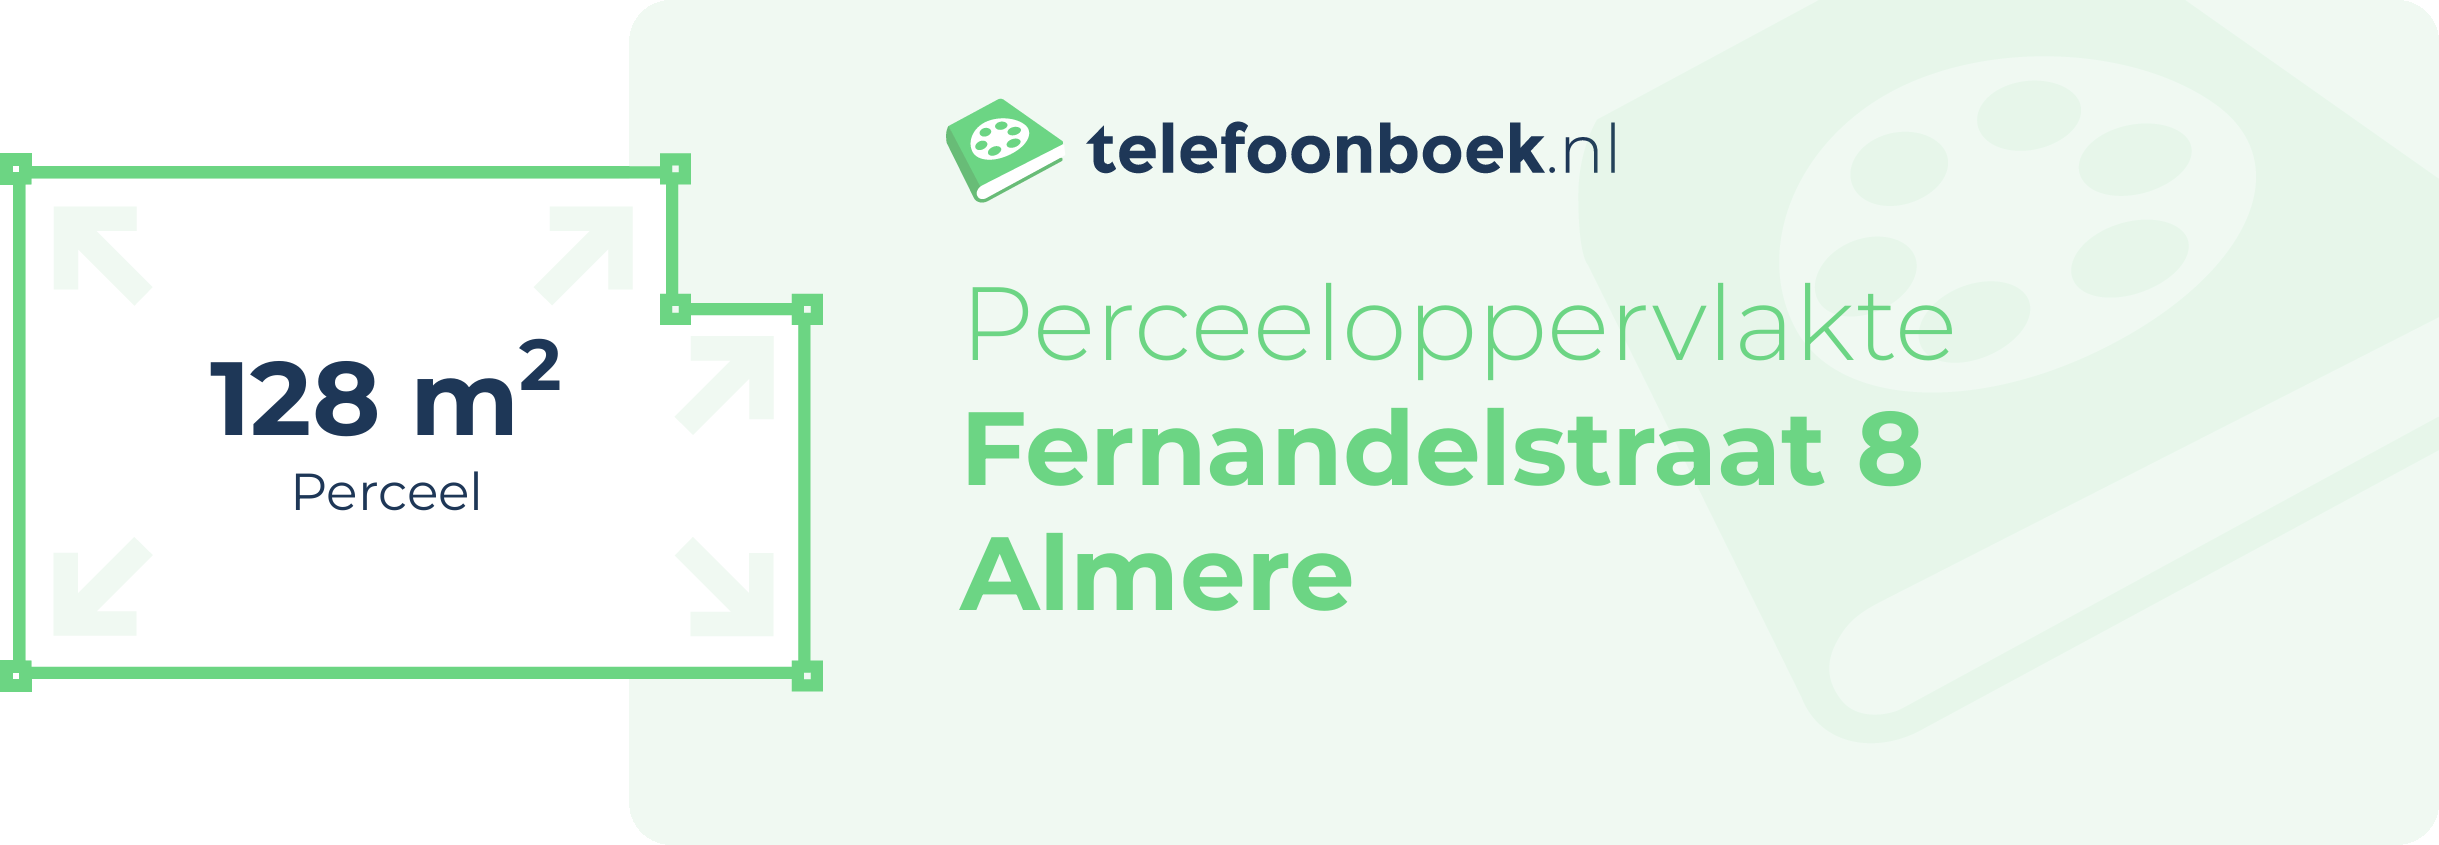 Perceeloppervlakte Fernandelstraat 8 Almere